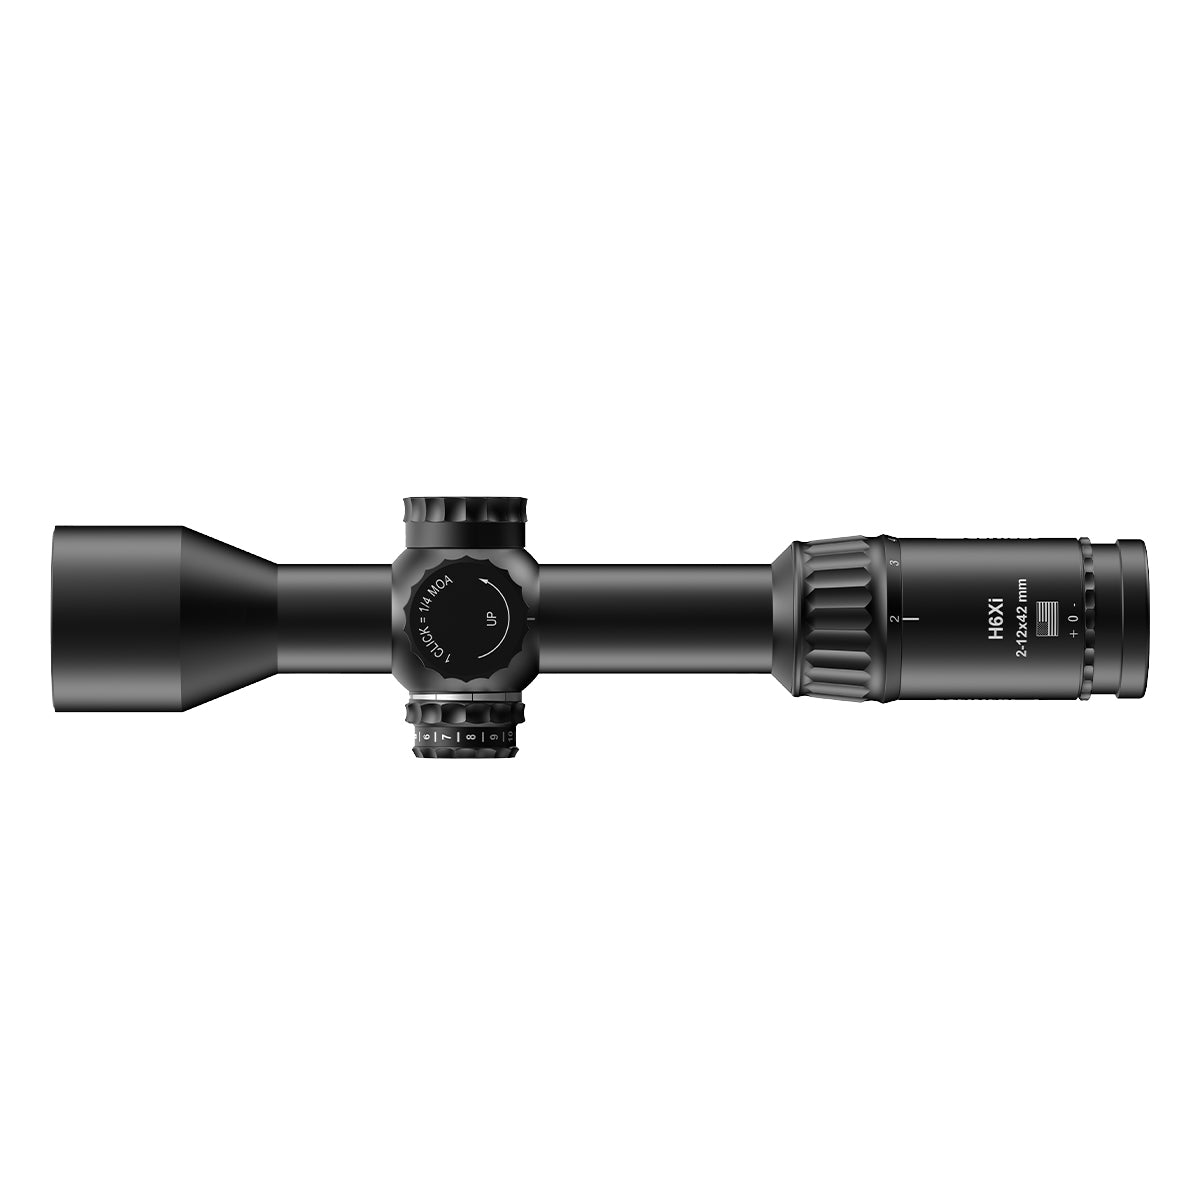 Steiner Optics H6Xi 2-12x42 MHR-MOA Riflescope